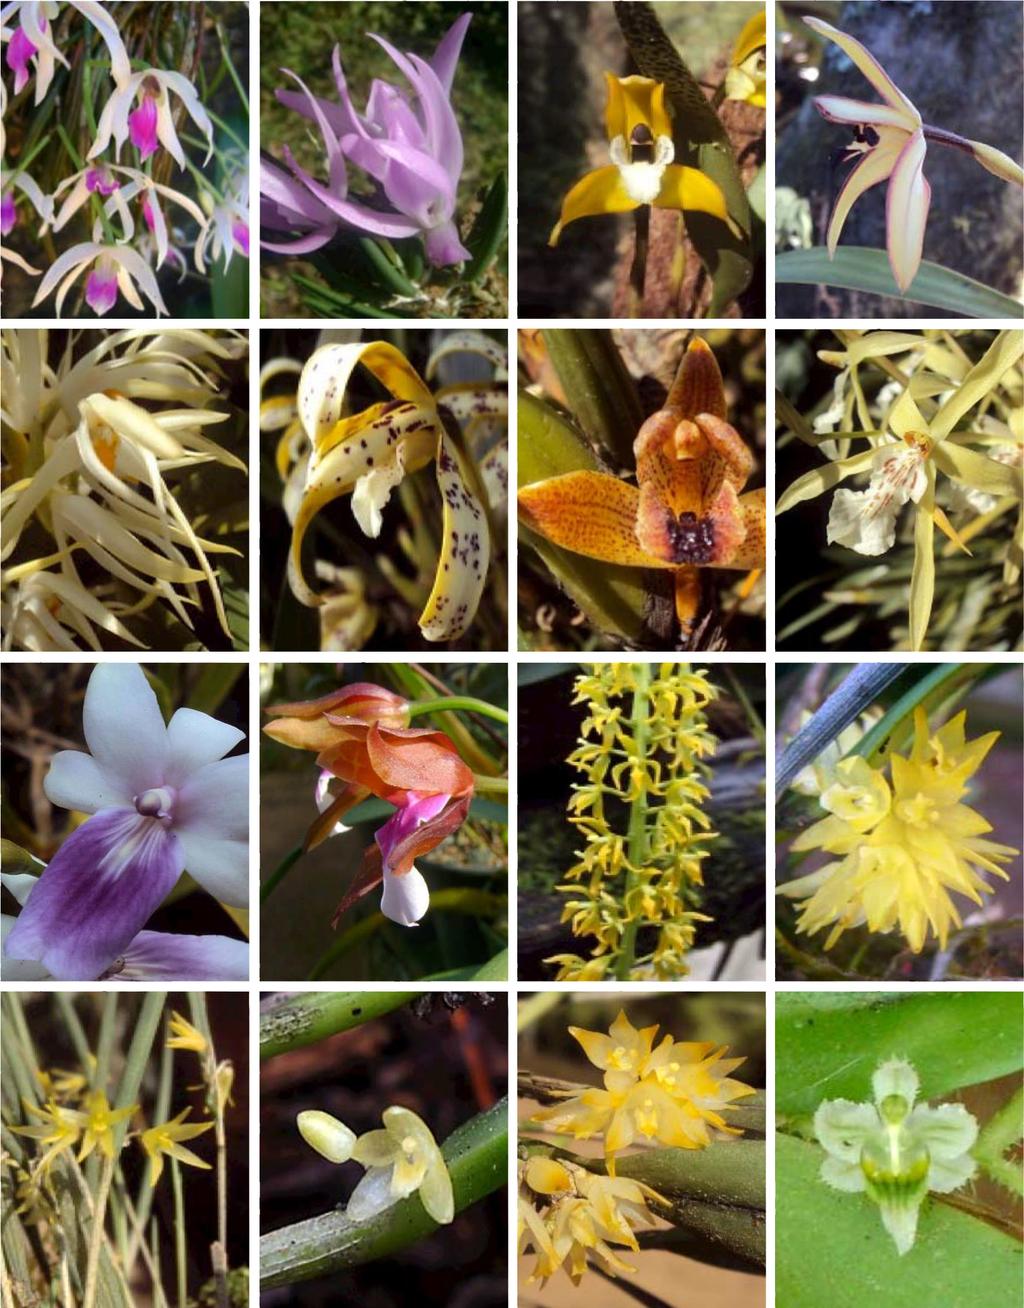 88 LANKESTERIANA Figure 7. From top left to bottom right: Leptotes bicolor. L. unicolor. Maxillaria chrysantha. M. marginata. M. ochroleuca. M. picta. M. subulata. Miltonia falvescens.